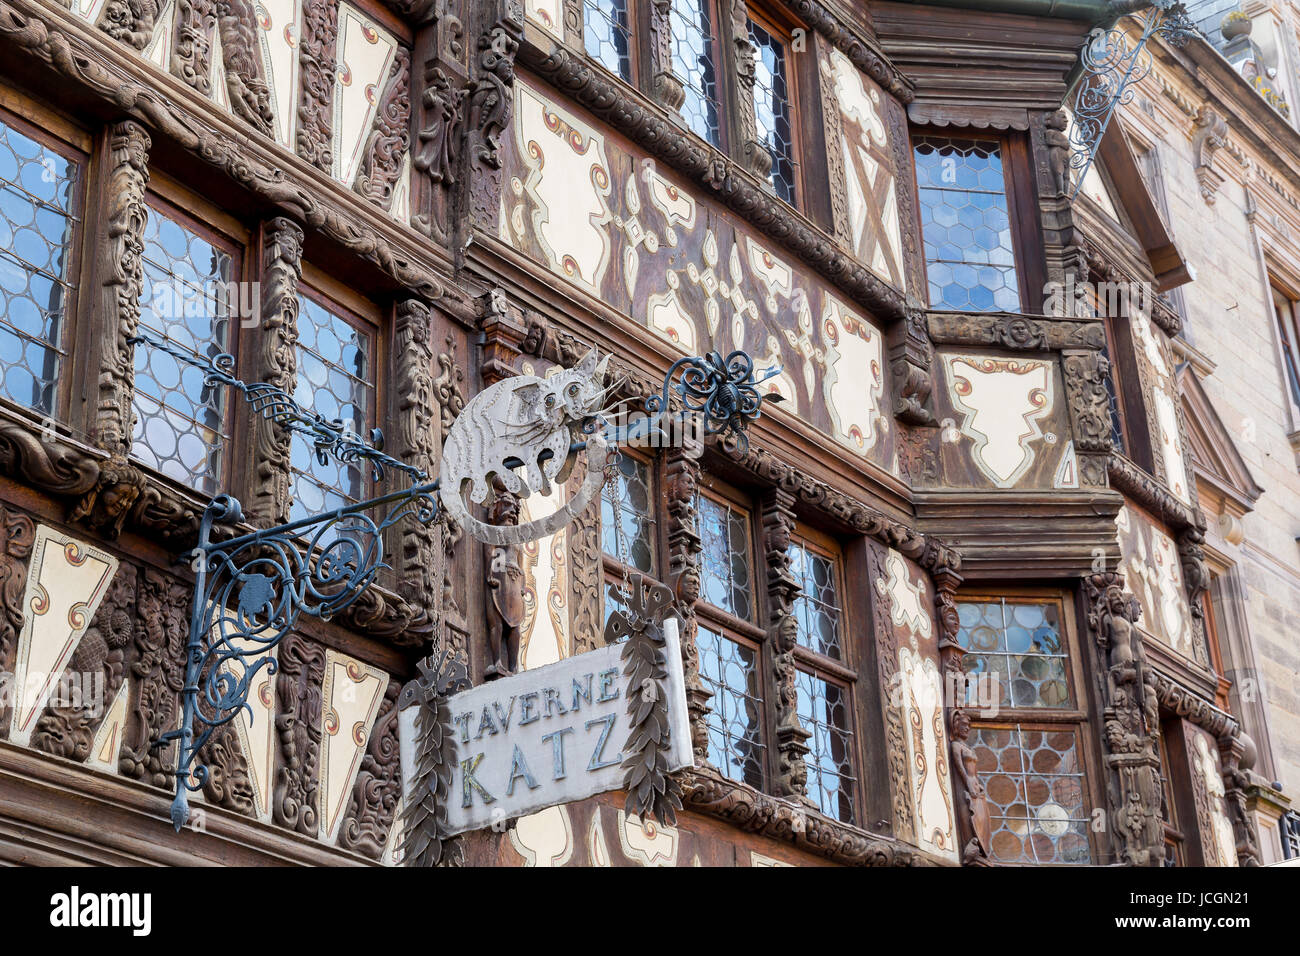 Maison Katz house from 17th Century (Taverne Katz), Saverne, Alsace, France. Stock Photo